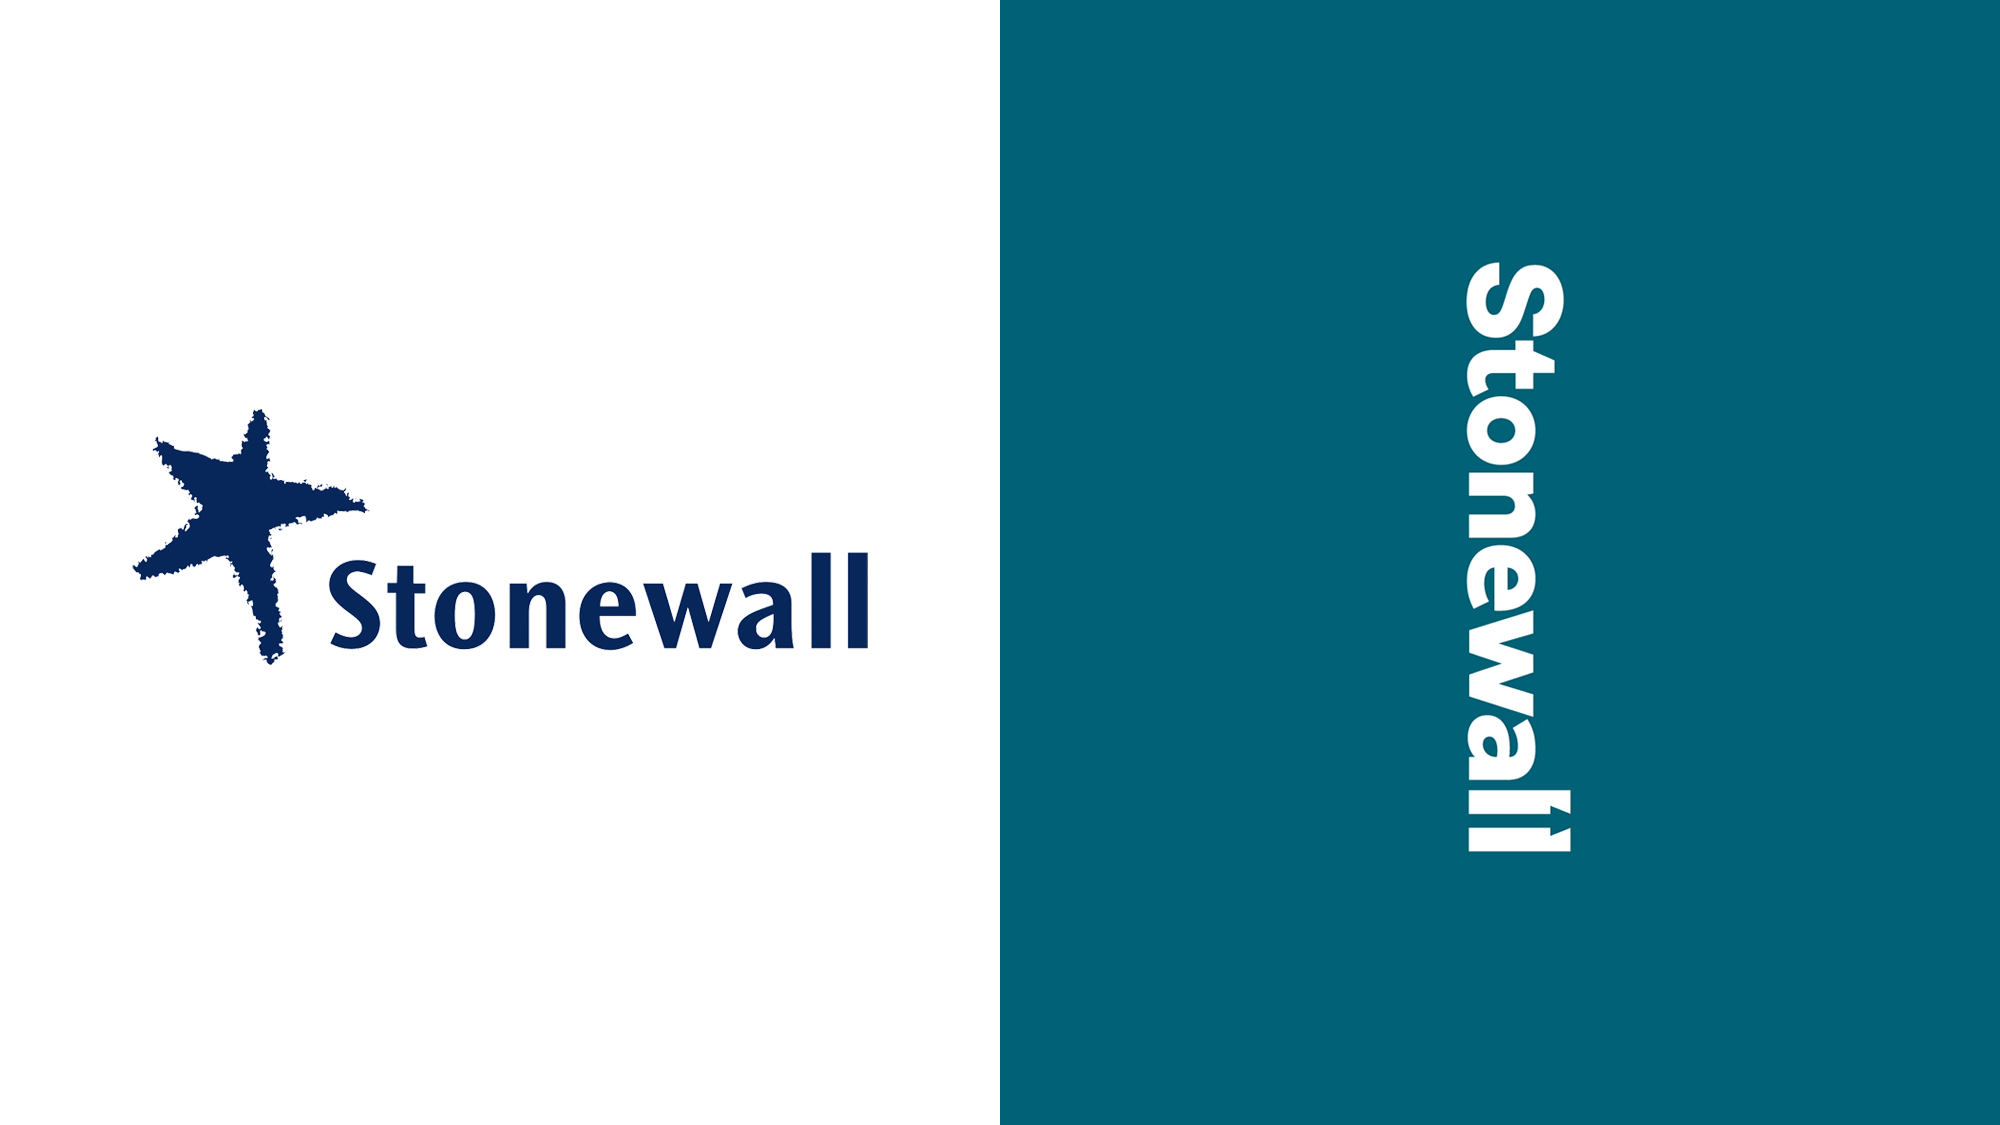 stonewall rebrand examples logo